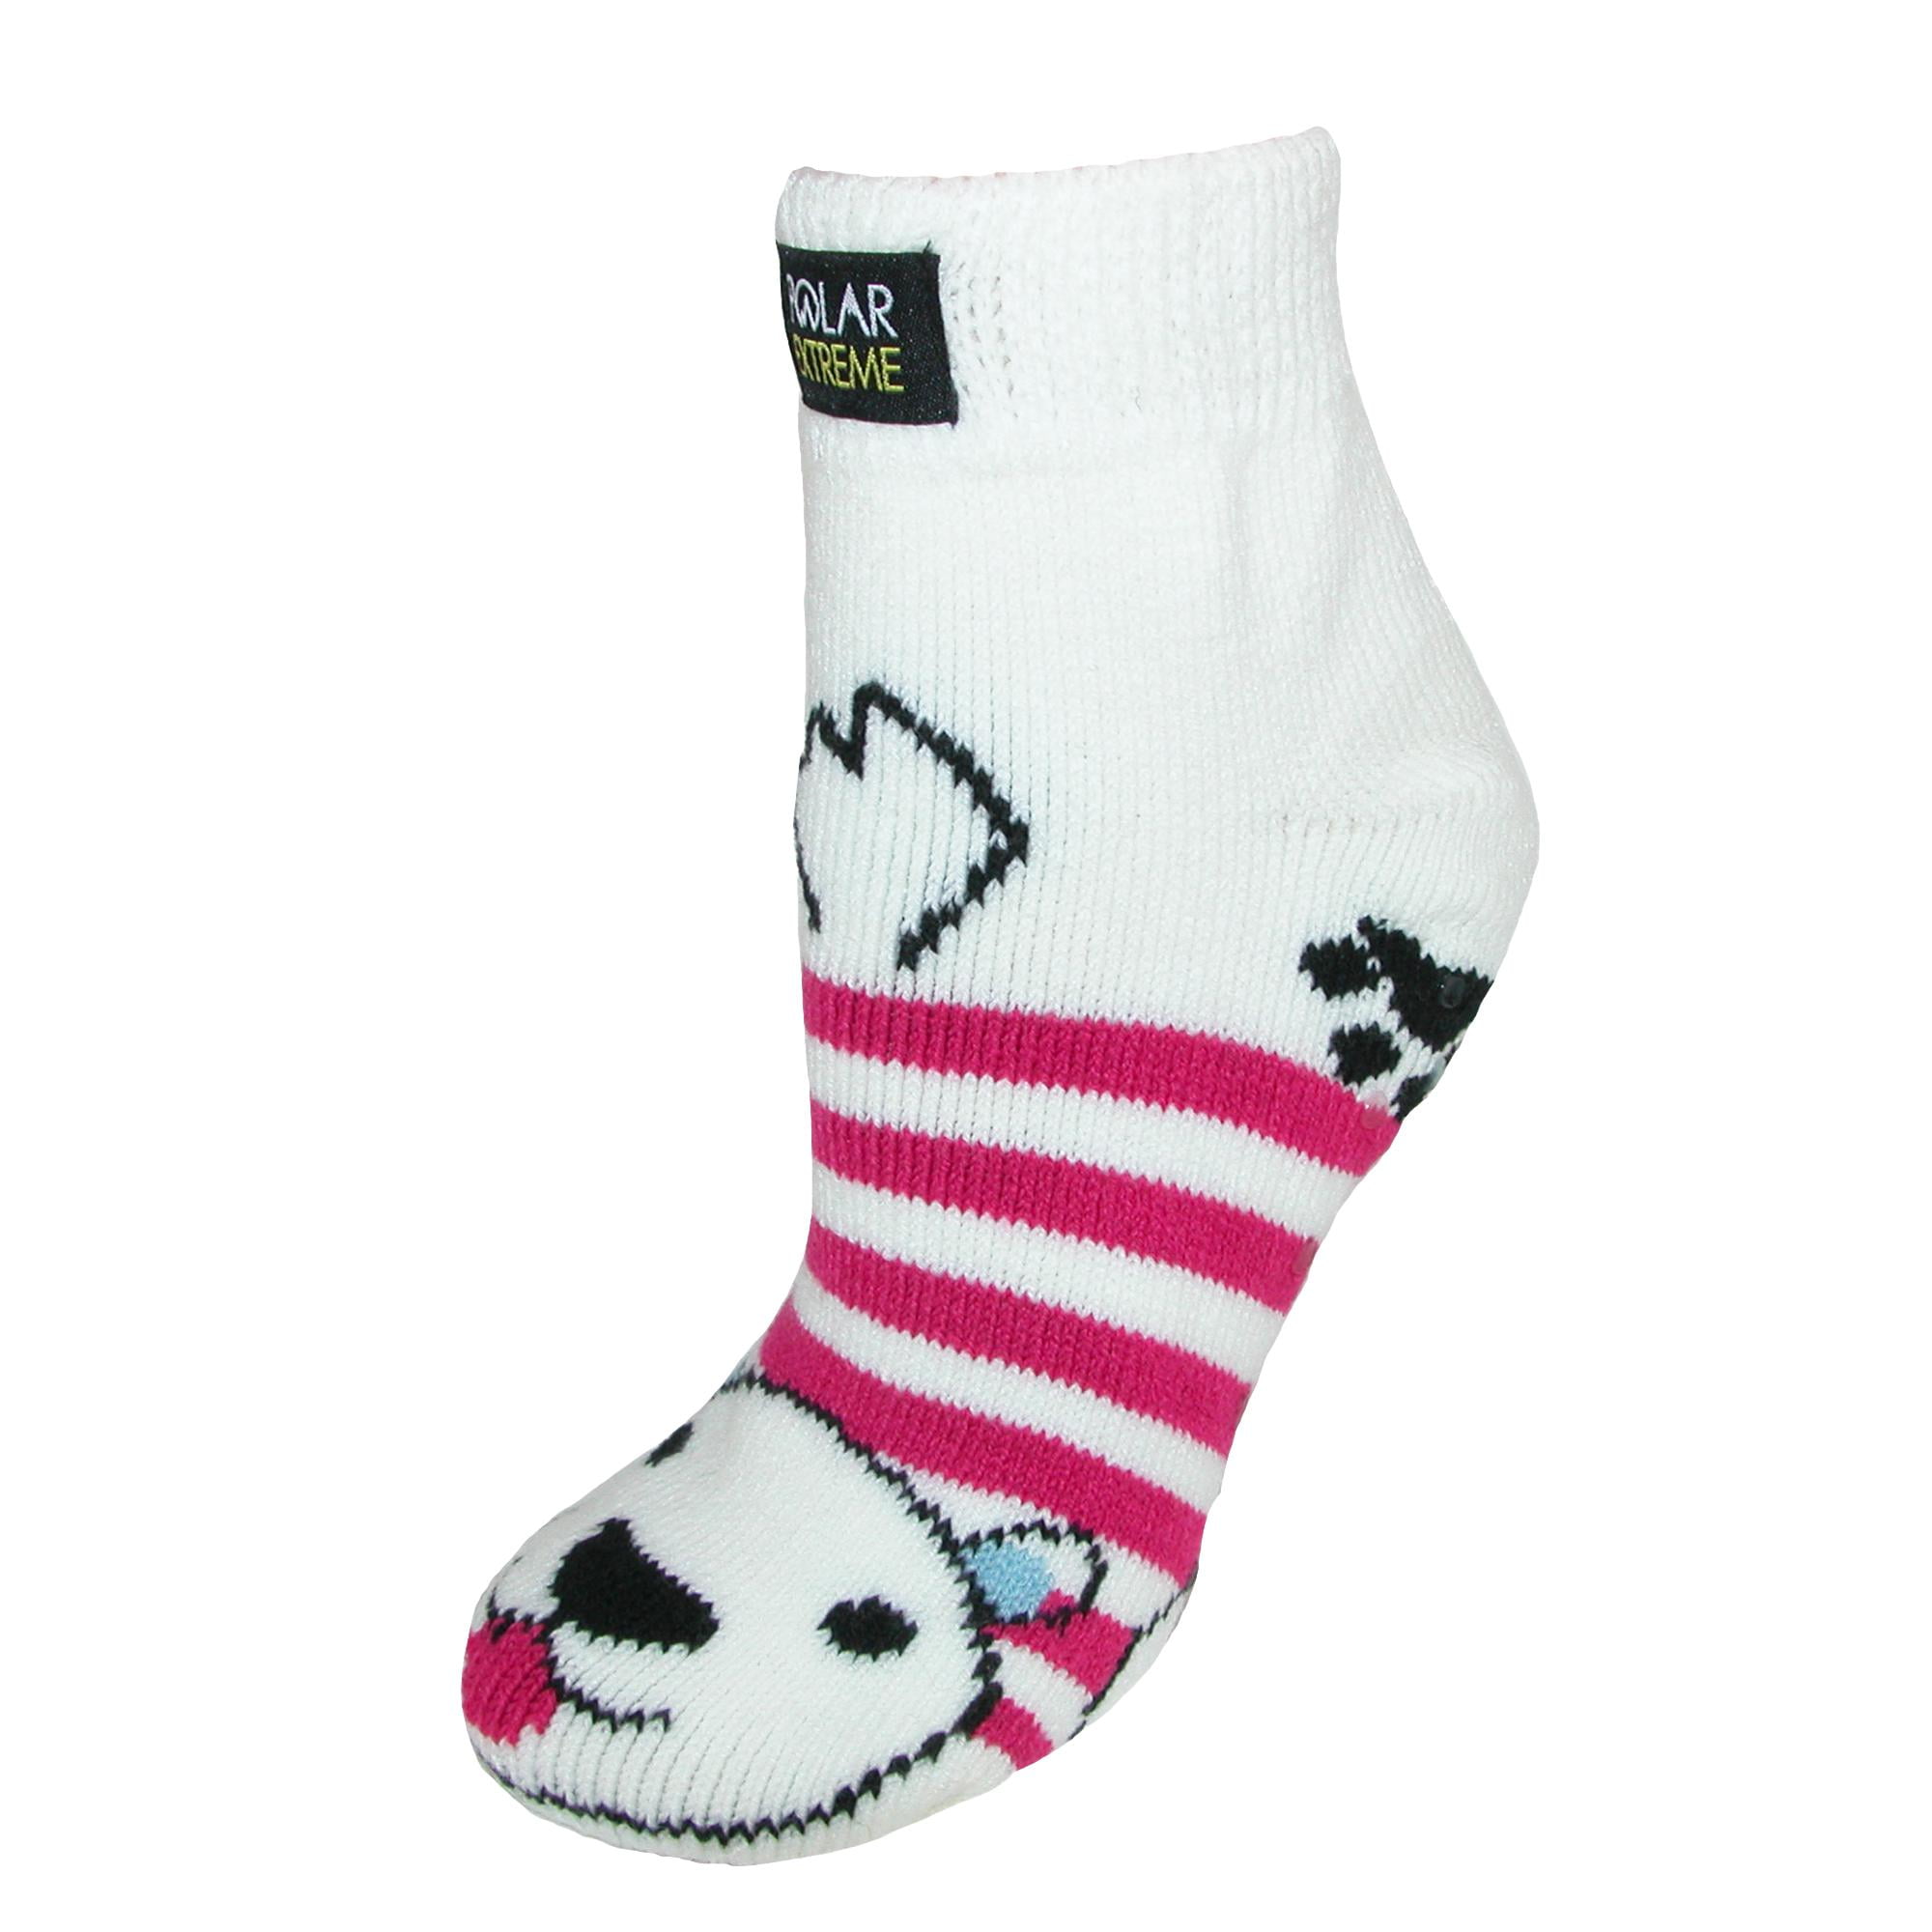 Polar Extreme Women's Low Cut Thermal Slipper Socks | Walmart Canada